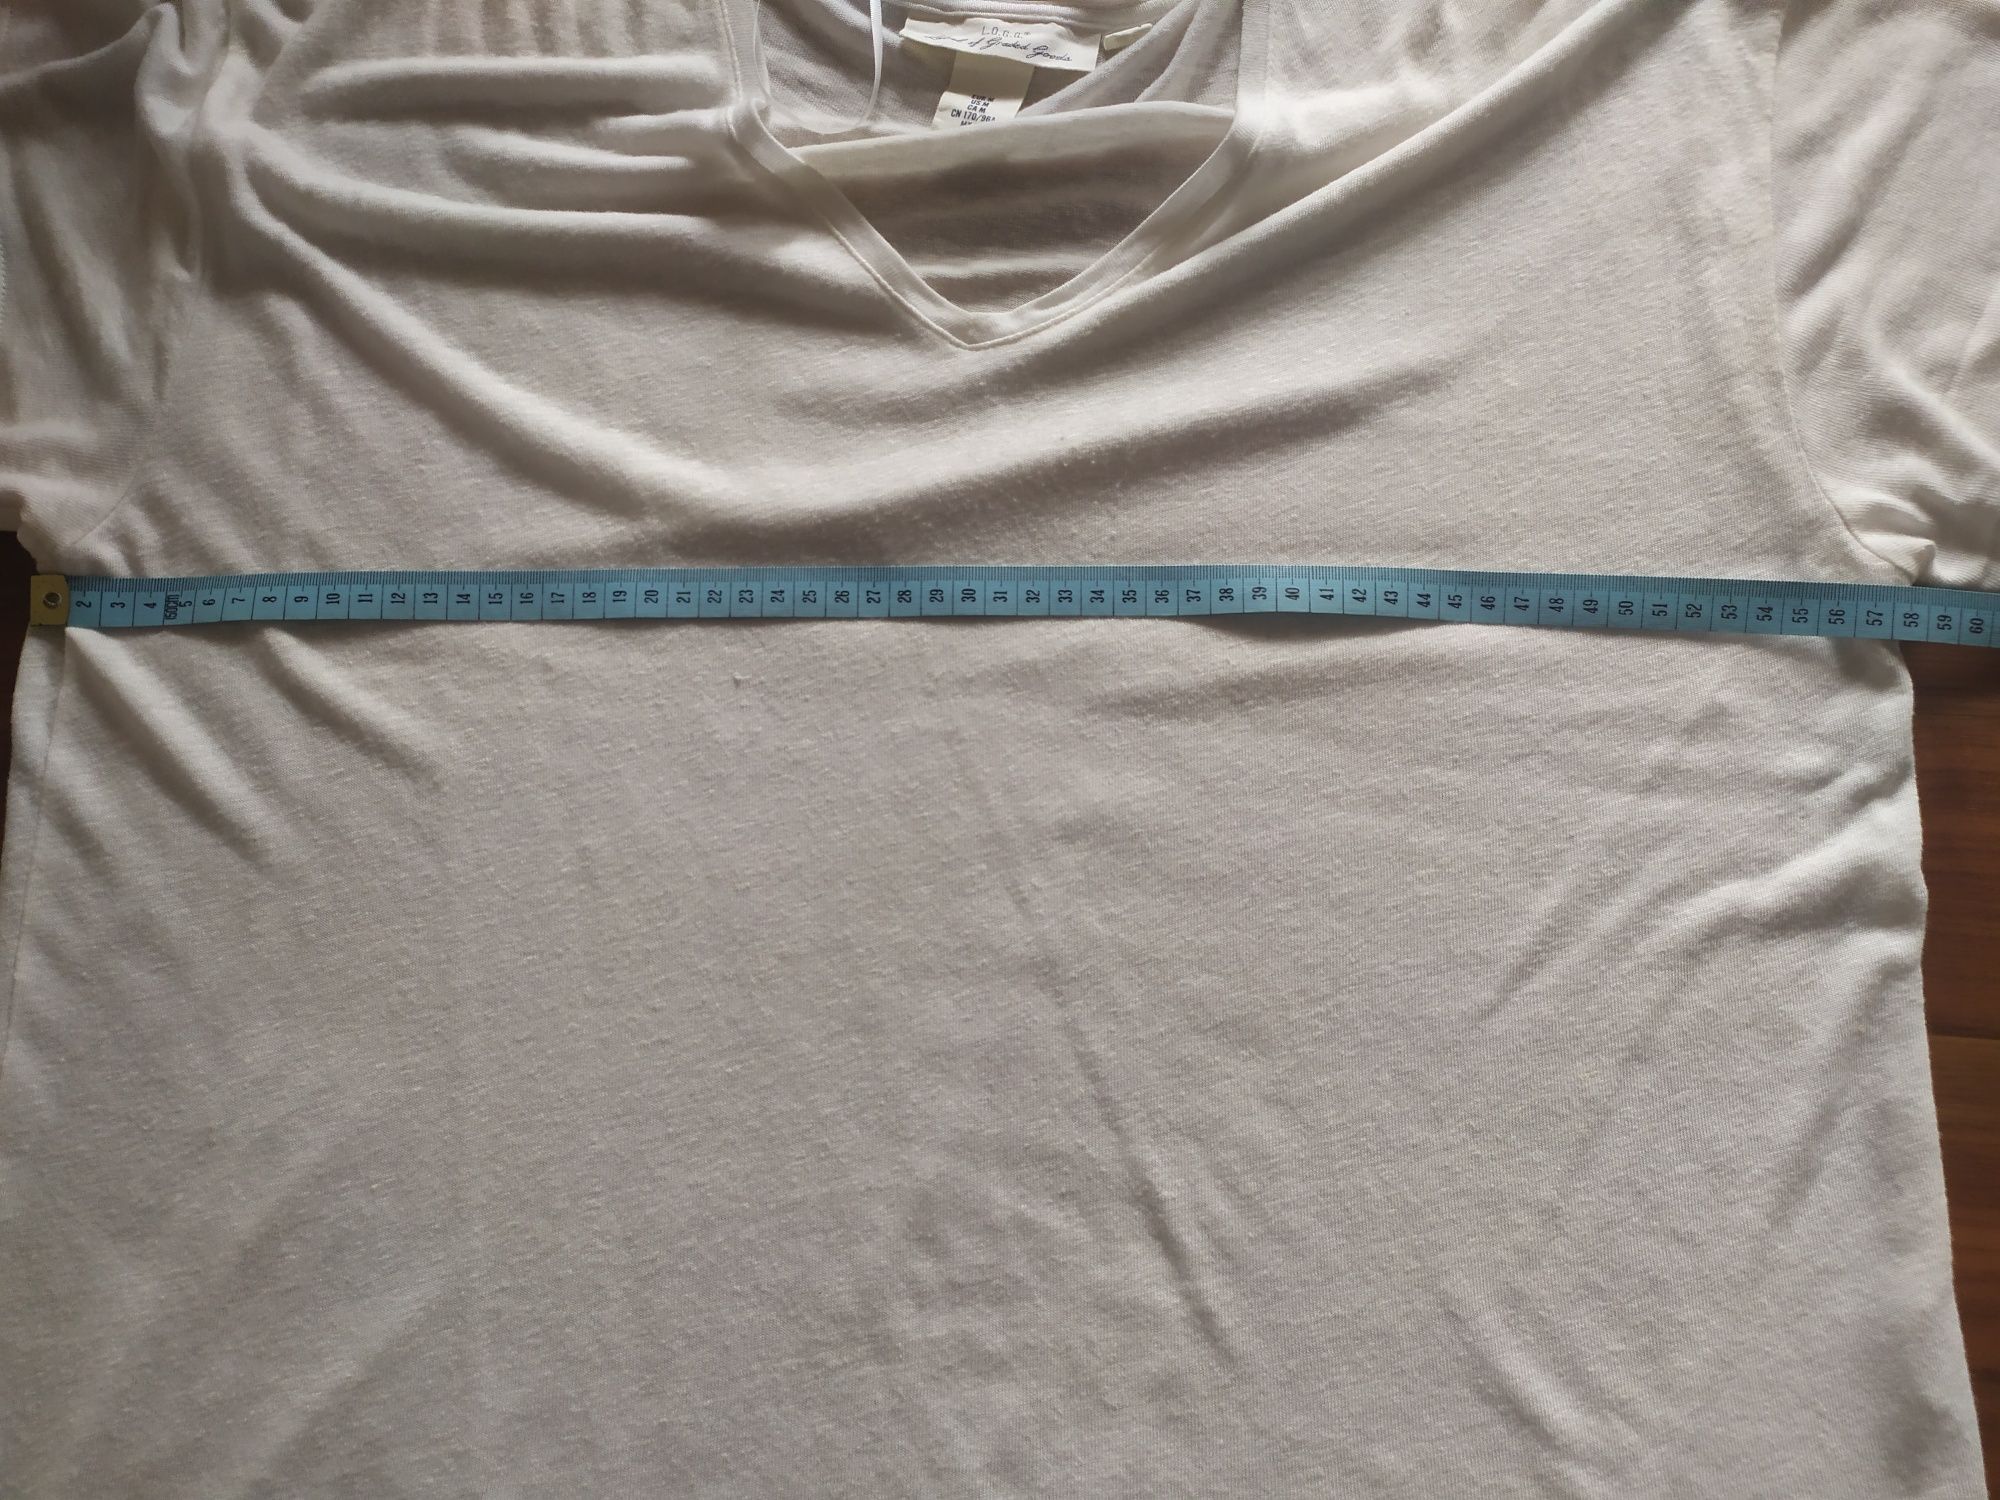 H&M kremowa przewiewna bluzka z rękawkami, t-shirt top.